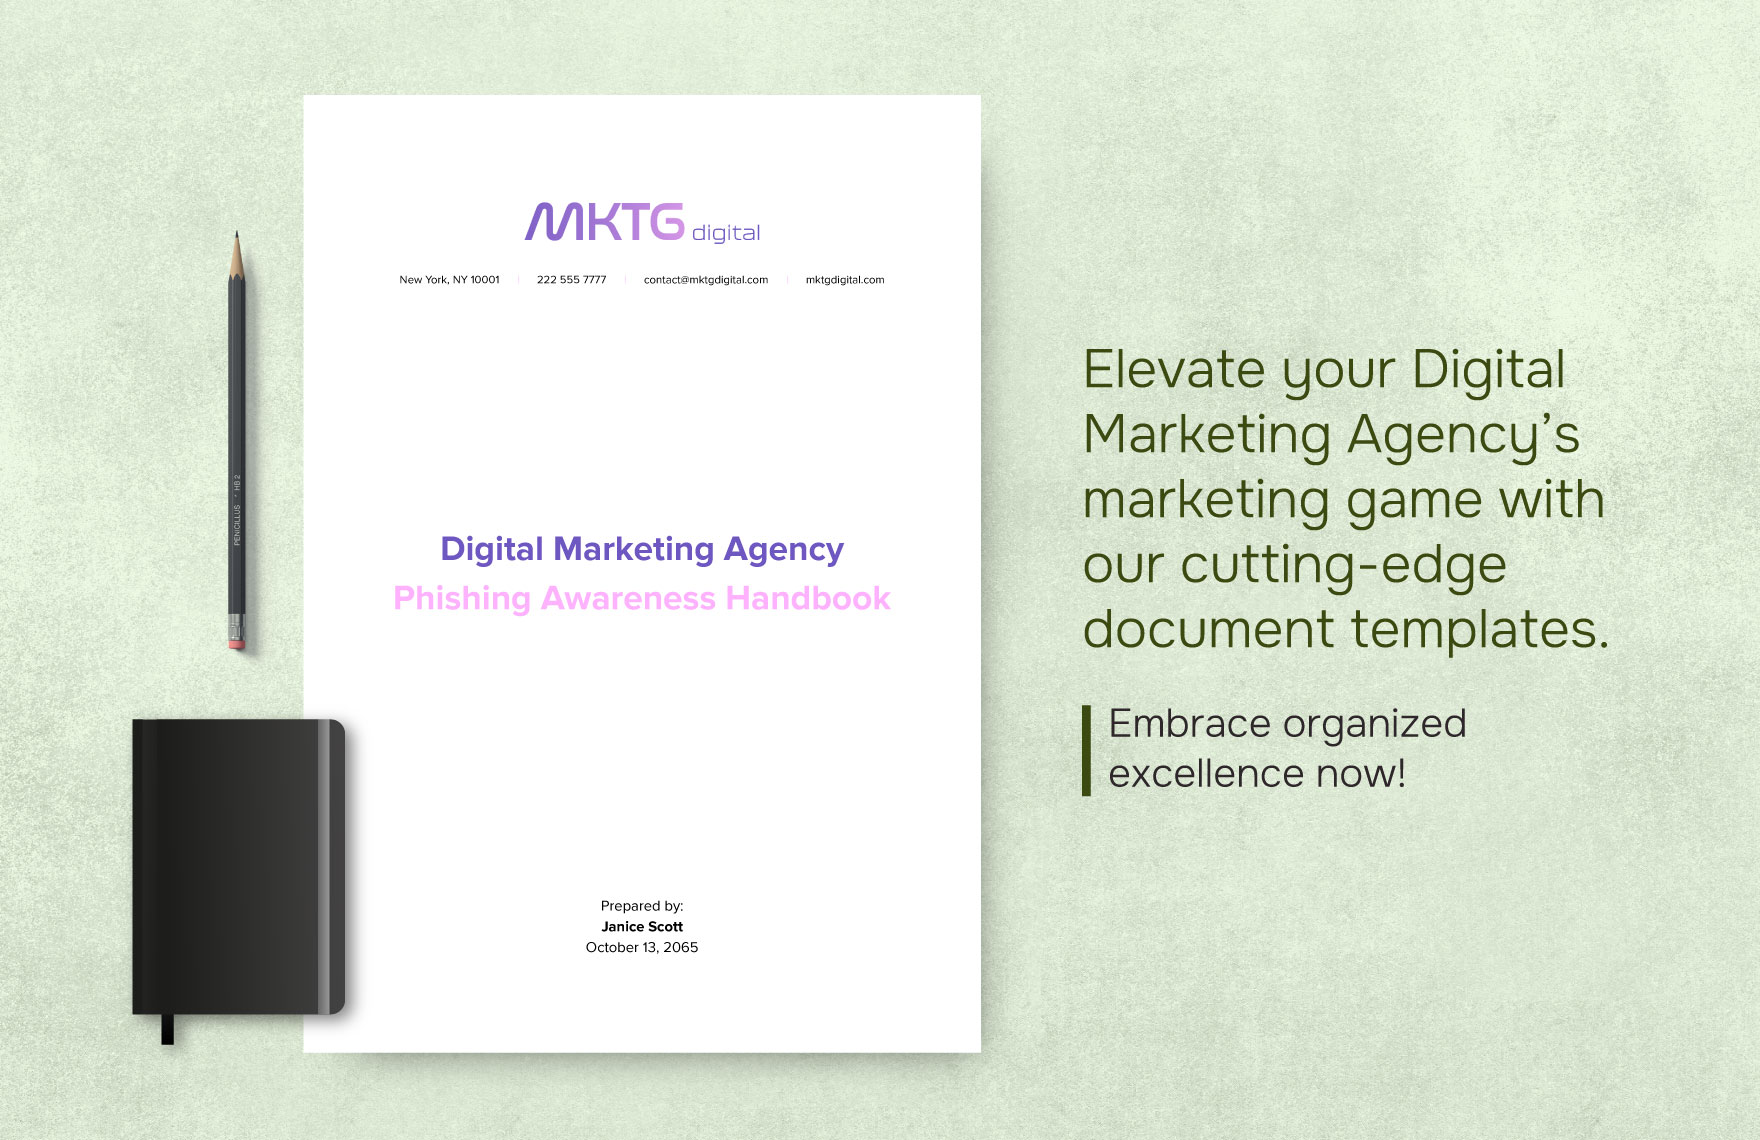 Digital Marketing Agency Phishing Awareness Handbook Template